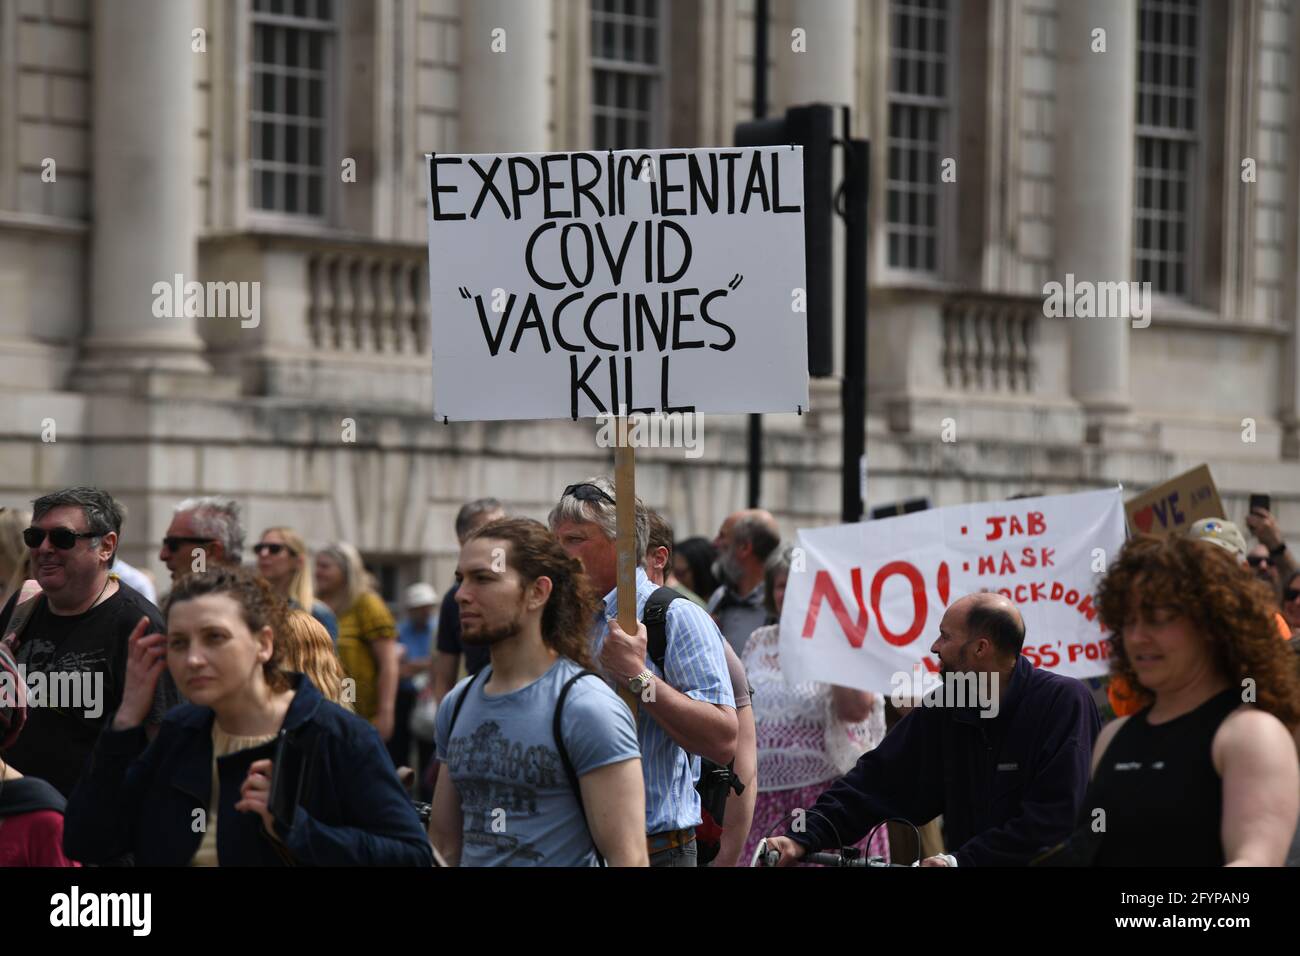 Londres, Reino Unido. 29th de mayo de 2021. Unid for Freedom NO COVID PASAPORTES Los manifestantes que portan pancartas marchan por la libertad contra los pasaportes de vacunas en Londres, el 29th de mayo de 2021. Crédito: Picture Capital/Alamy Live News Foto de stock